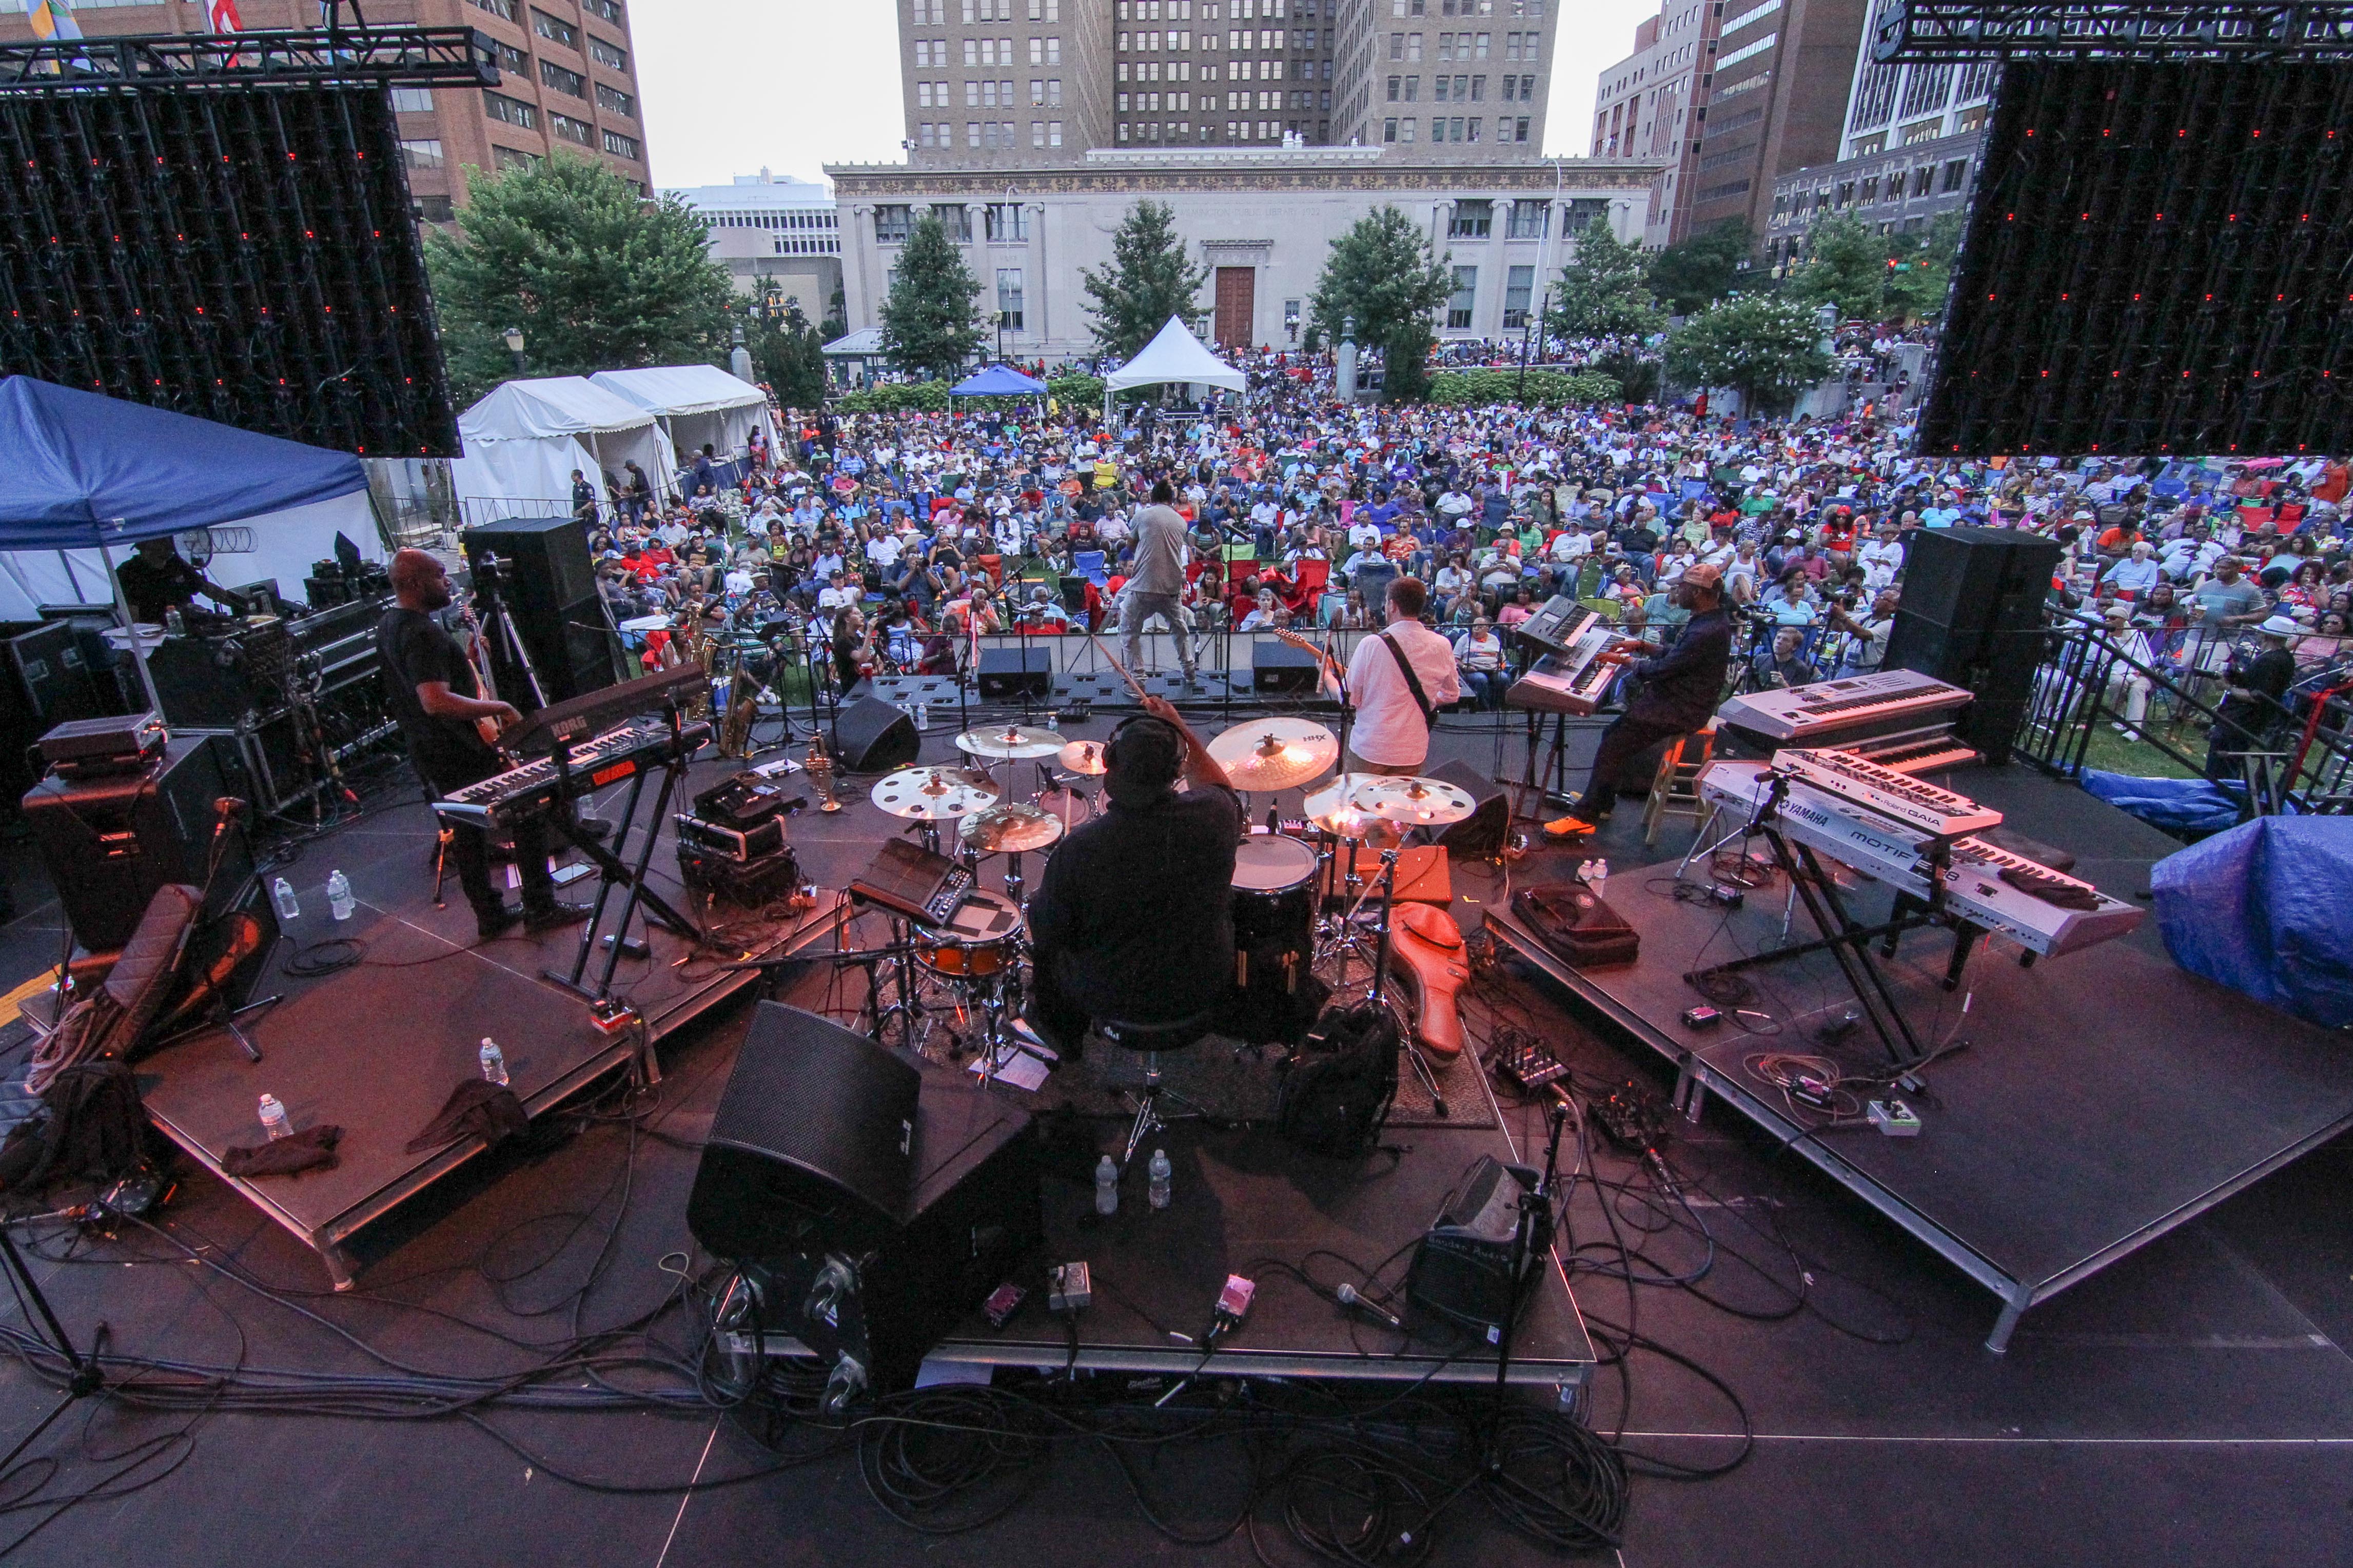 Cityfest, Inc., Announces Return of YearRound Jazz Concert Series